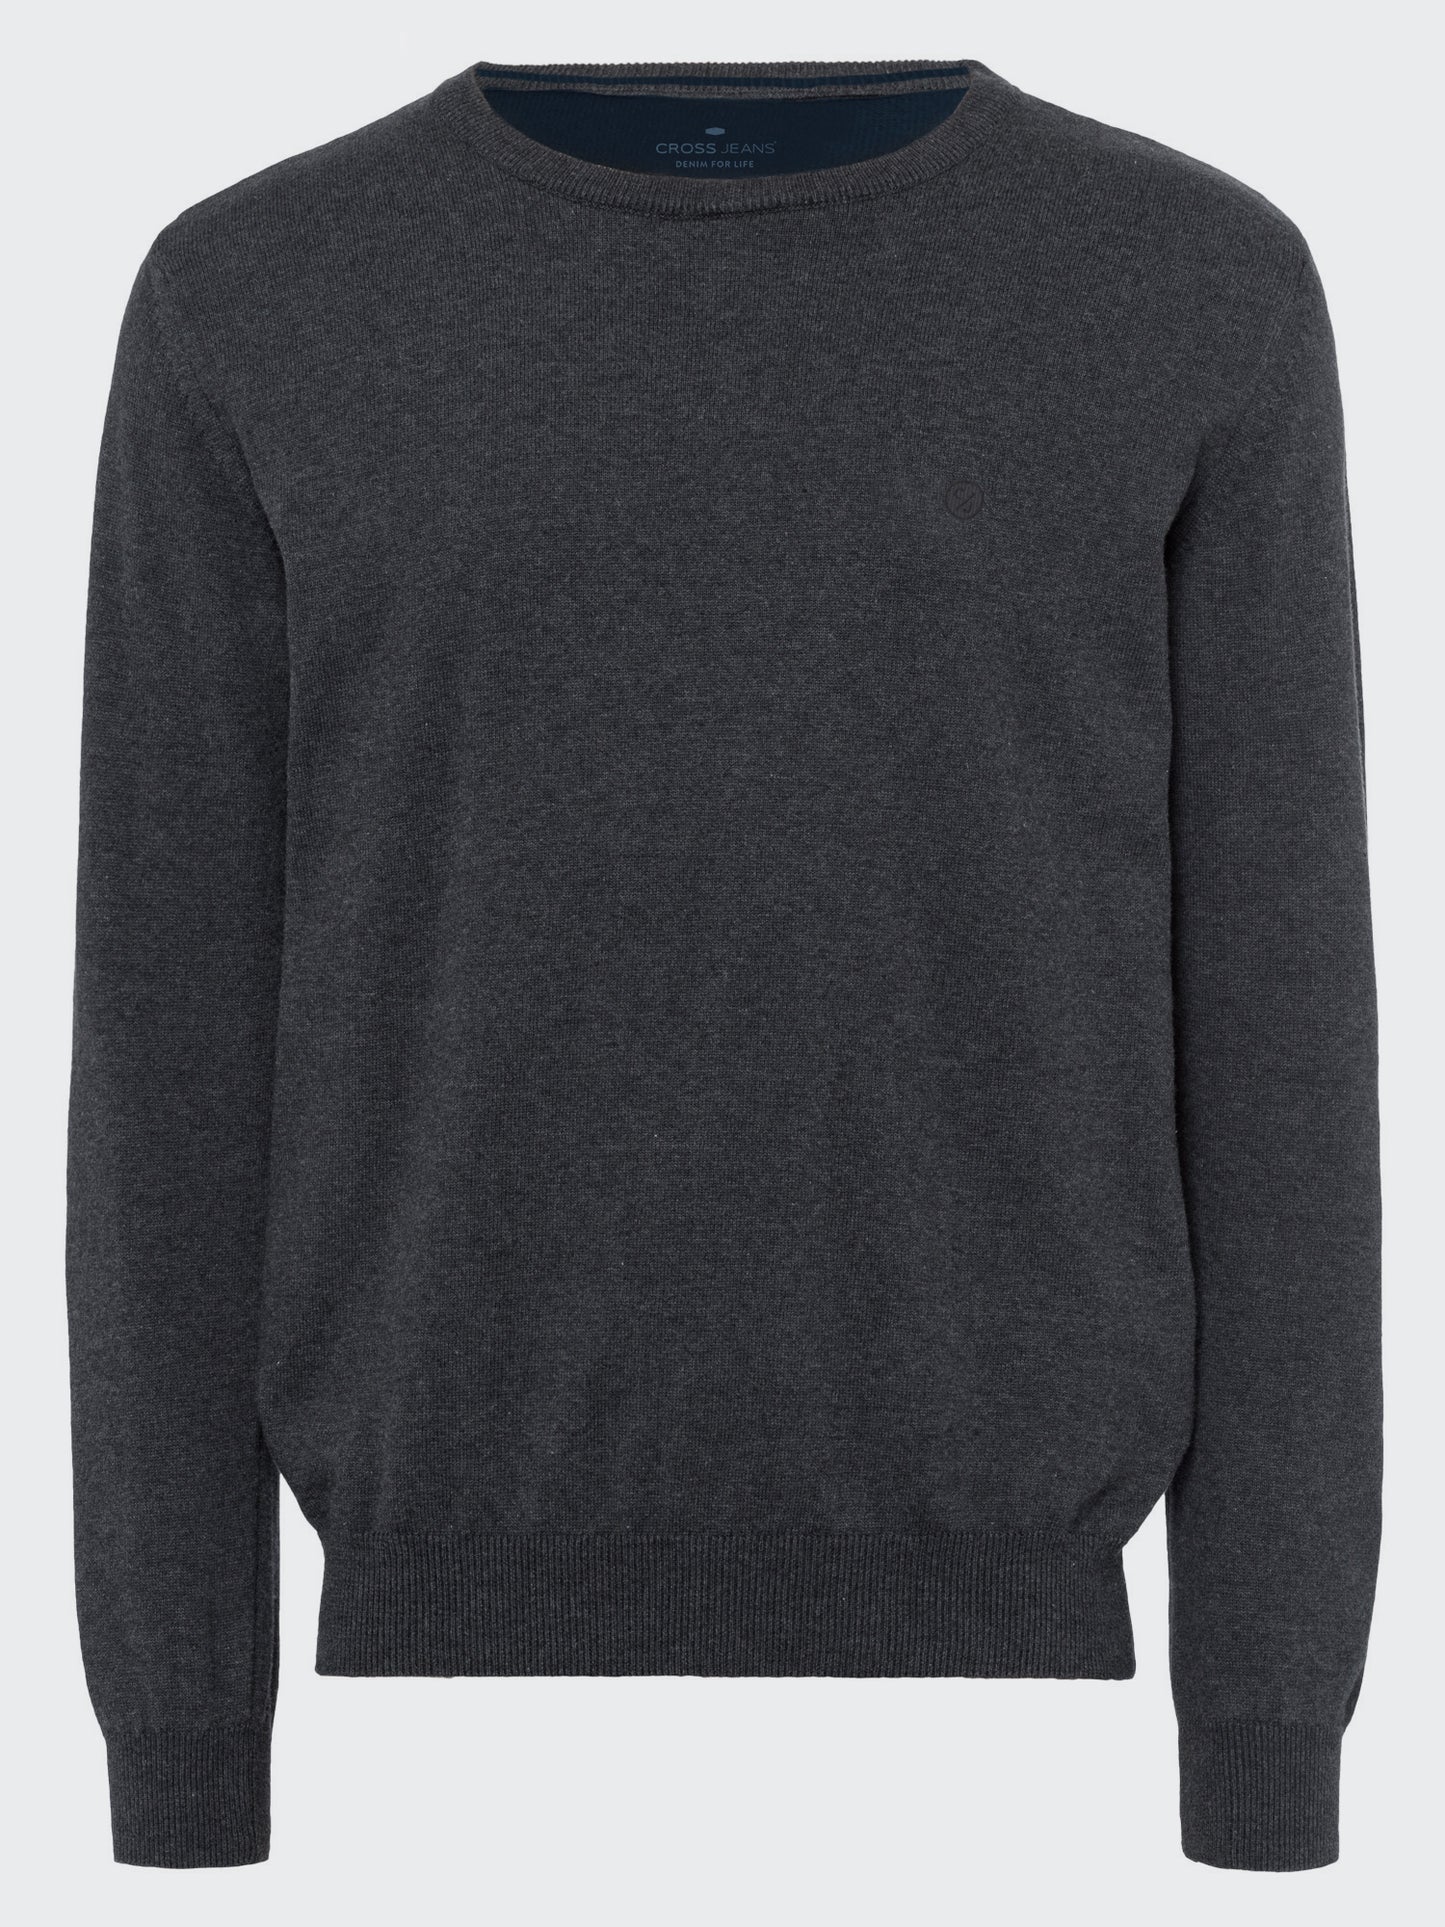 Men's regular fine knit sweater gray